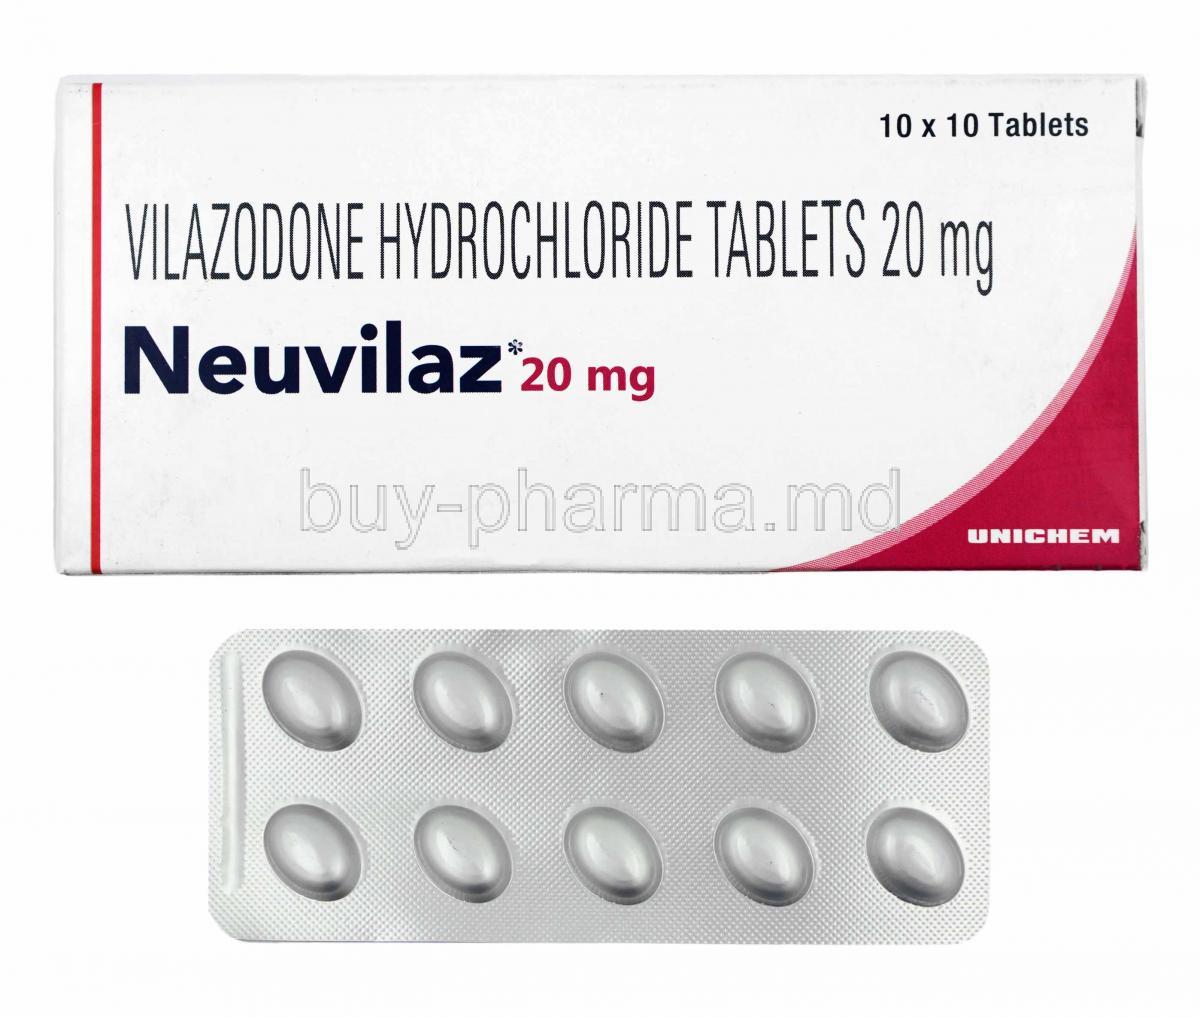 Neuvilaz, Vilazodone 20mg box and tablets